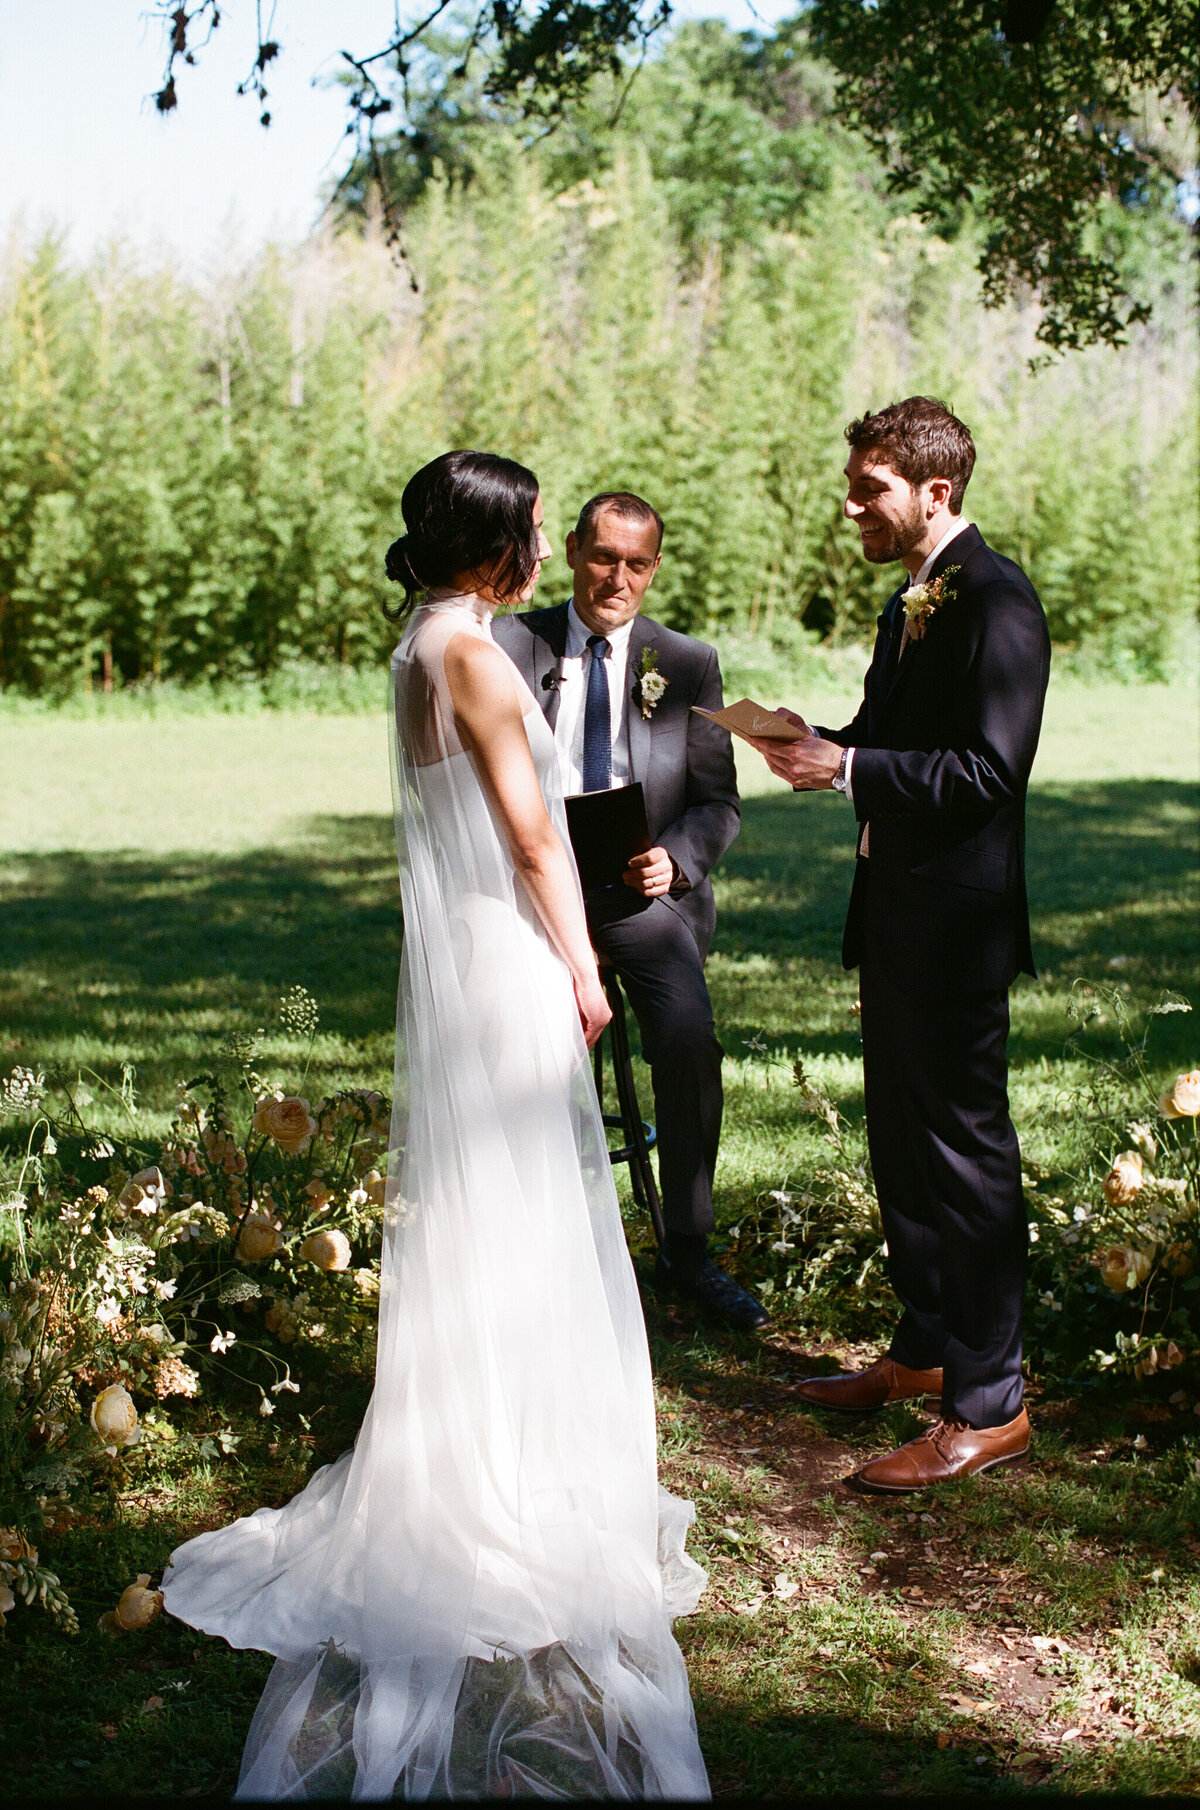 Bride and groom exchanging vows at Mattie's wedding venue in Austin